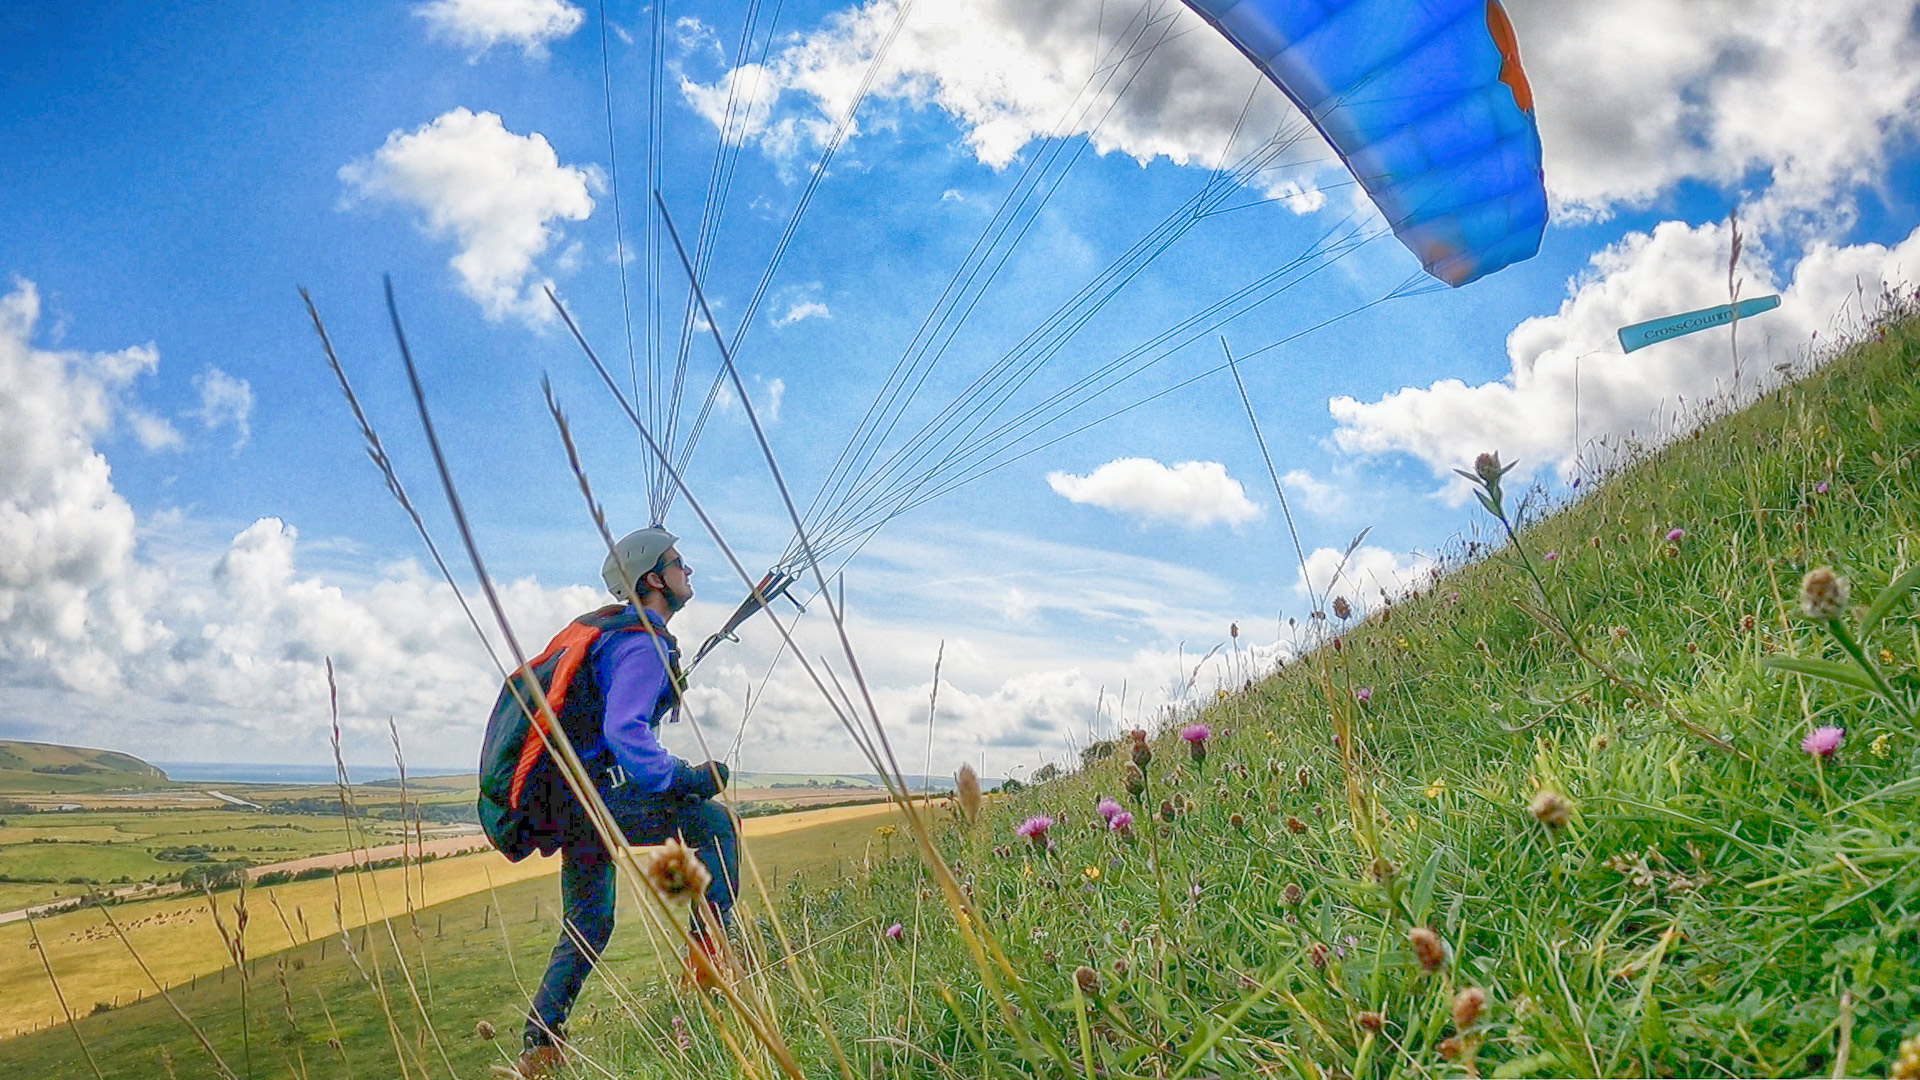 Crosswind launch on a paraglider